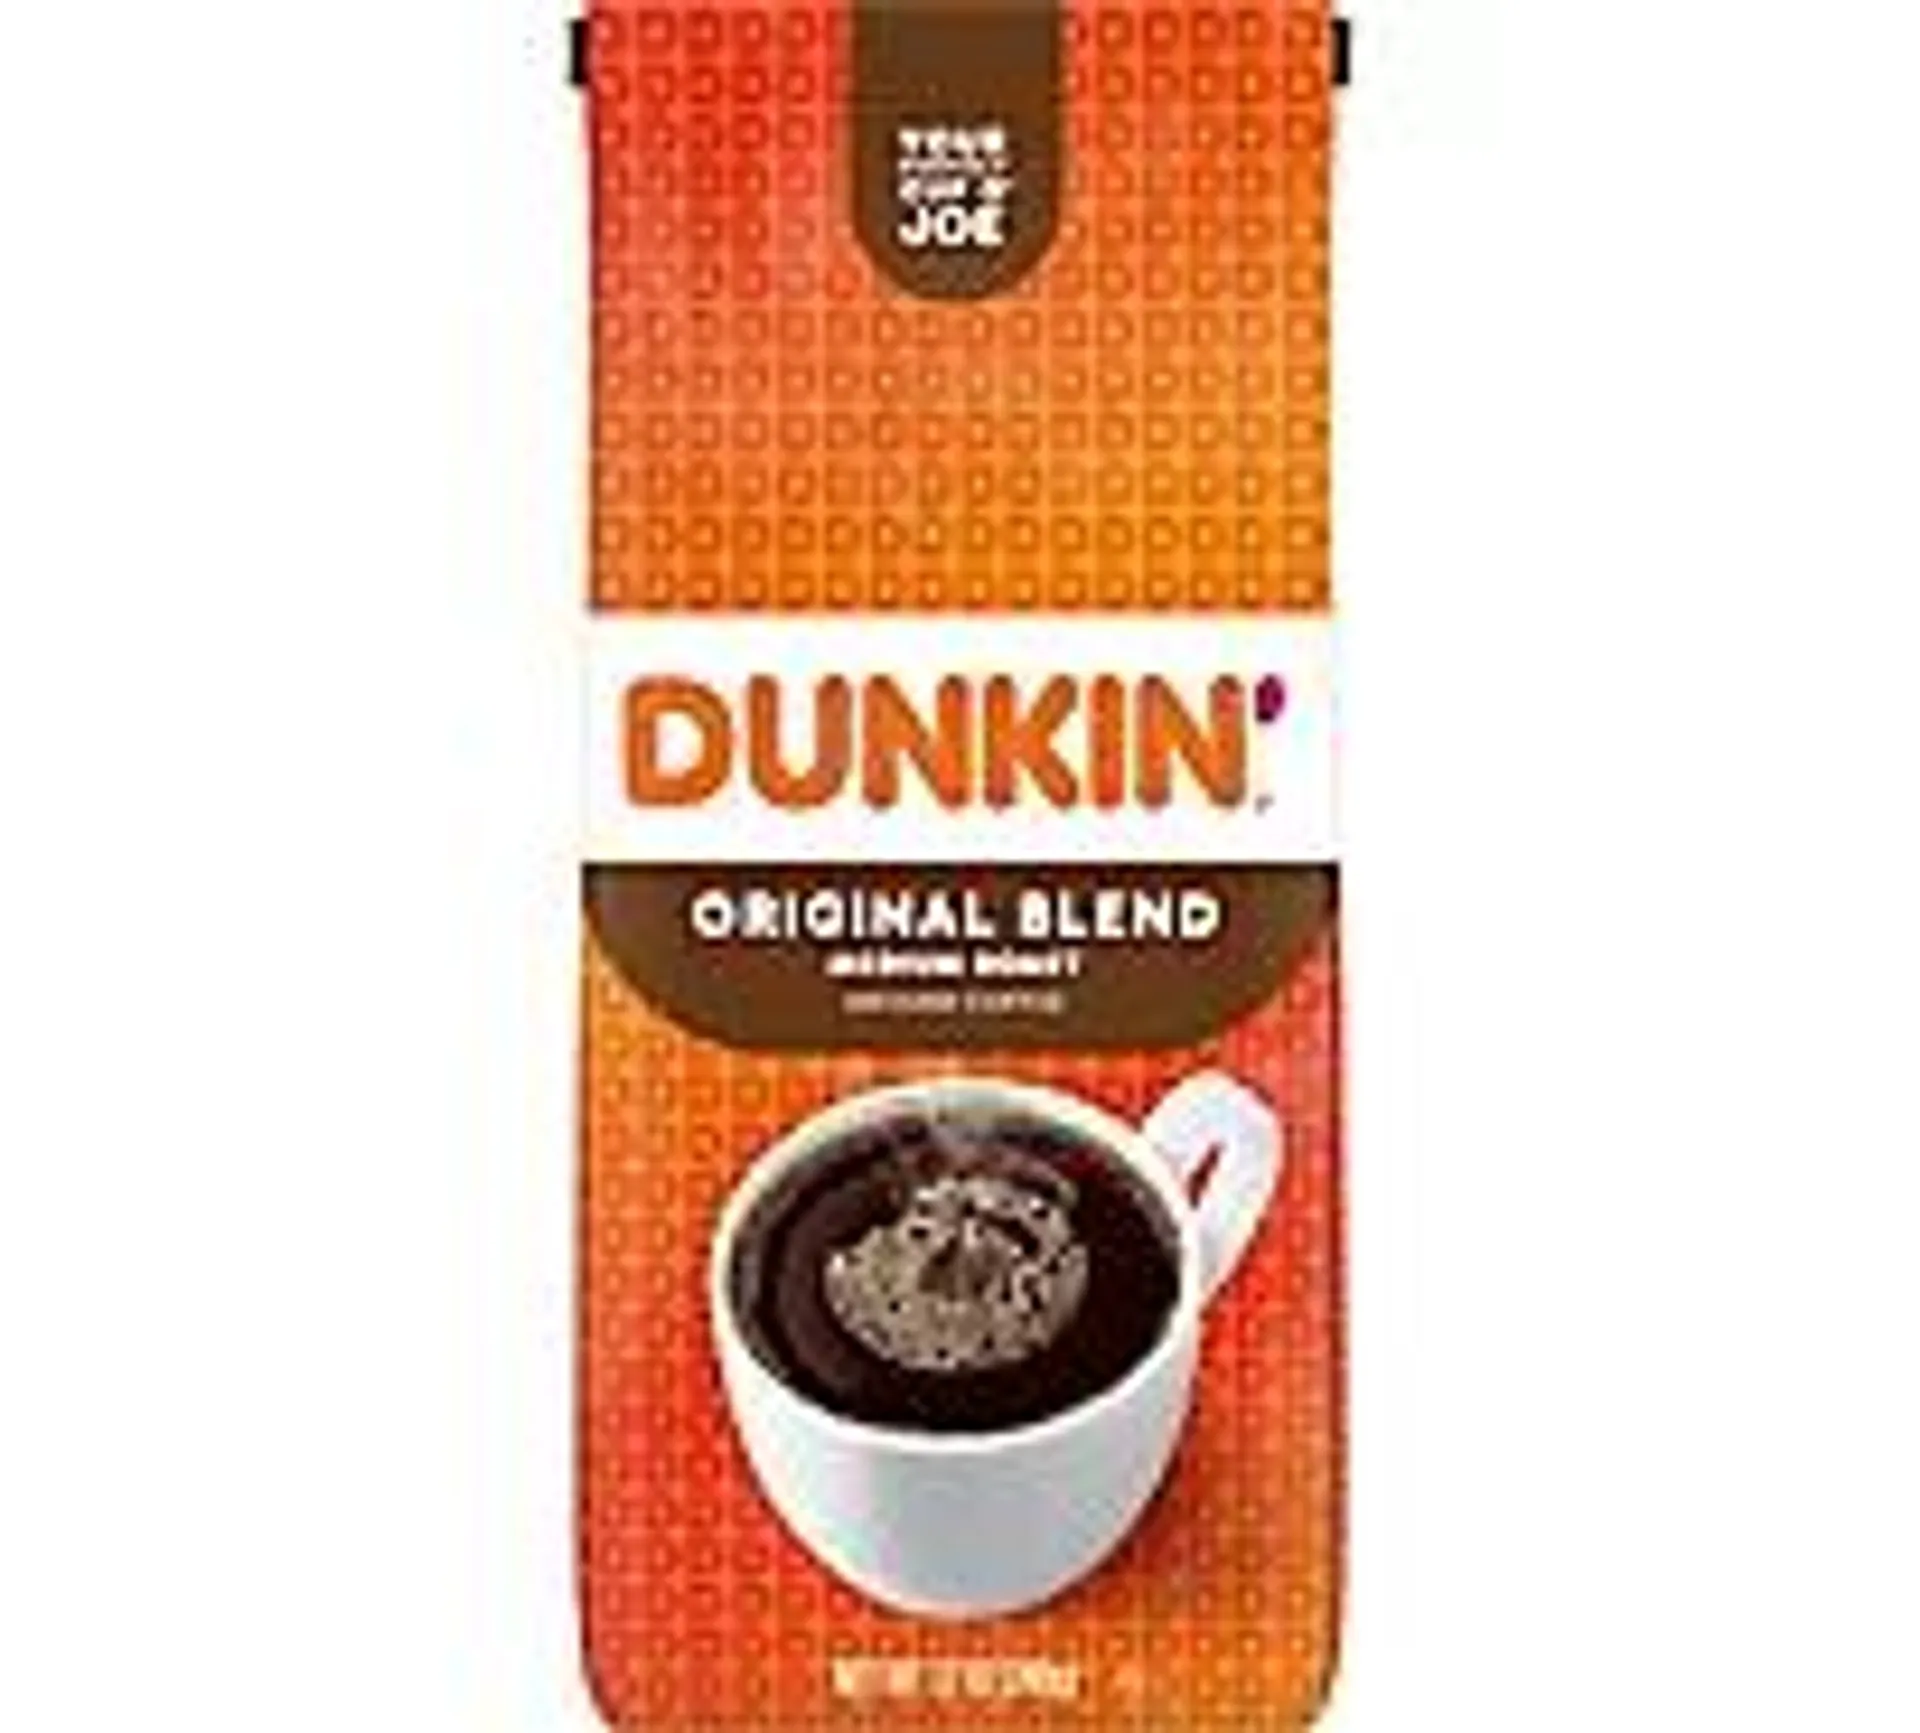 Dunkin Donuts Coffee Ground Me... iginal Blend - 12 Oz